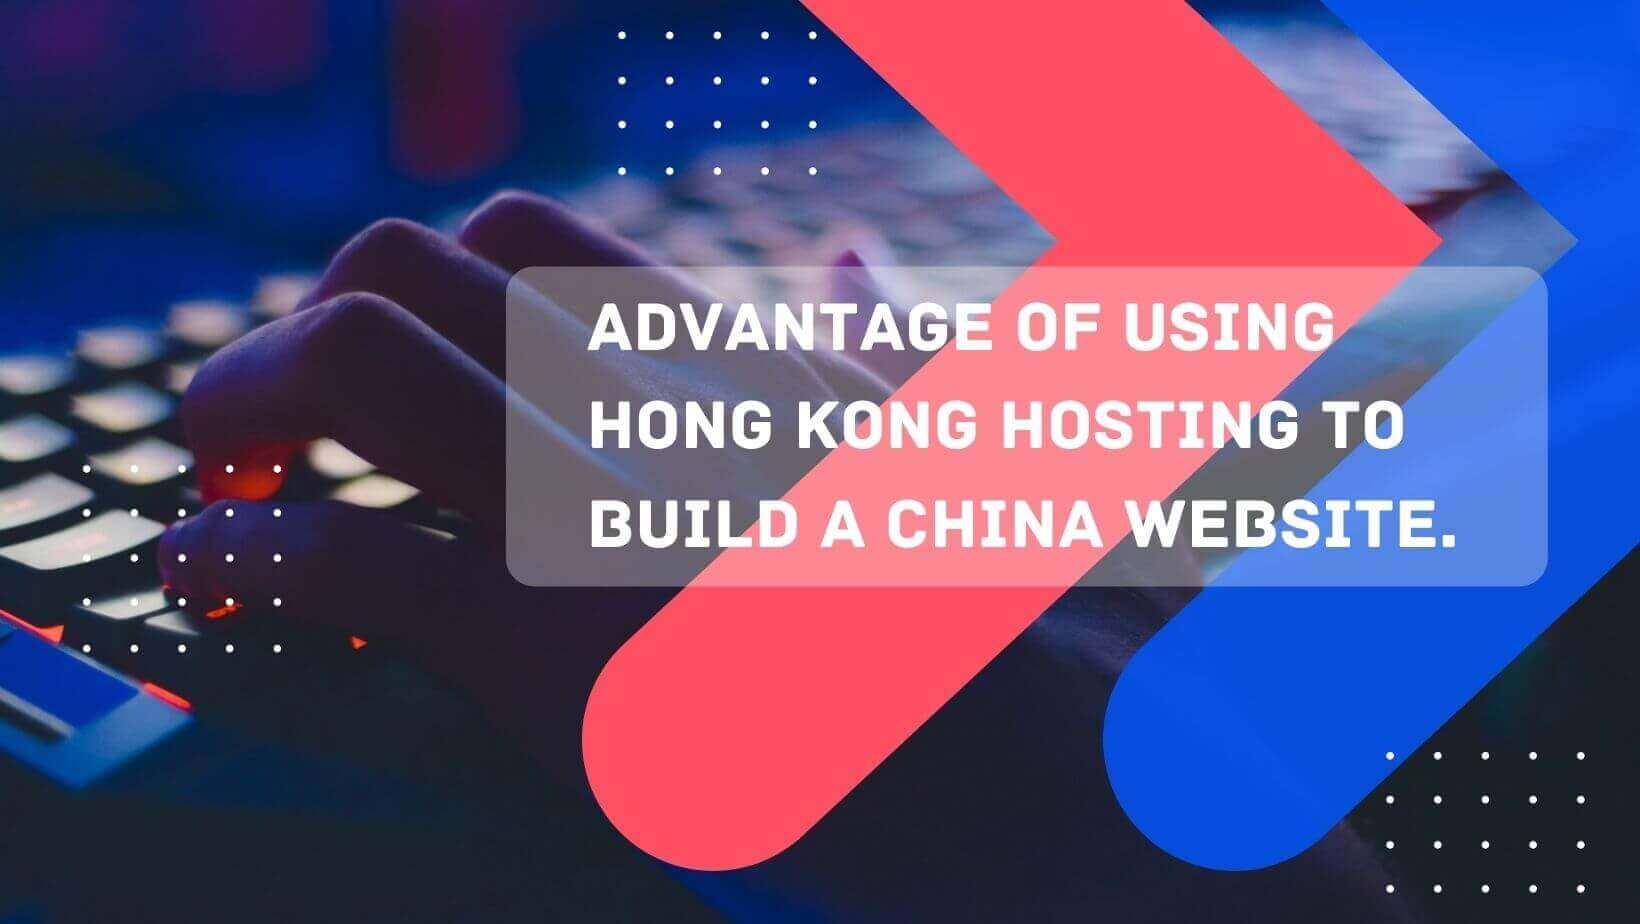 Advantage of using Hong Kong hosting to build a China website